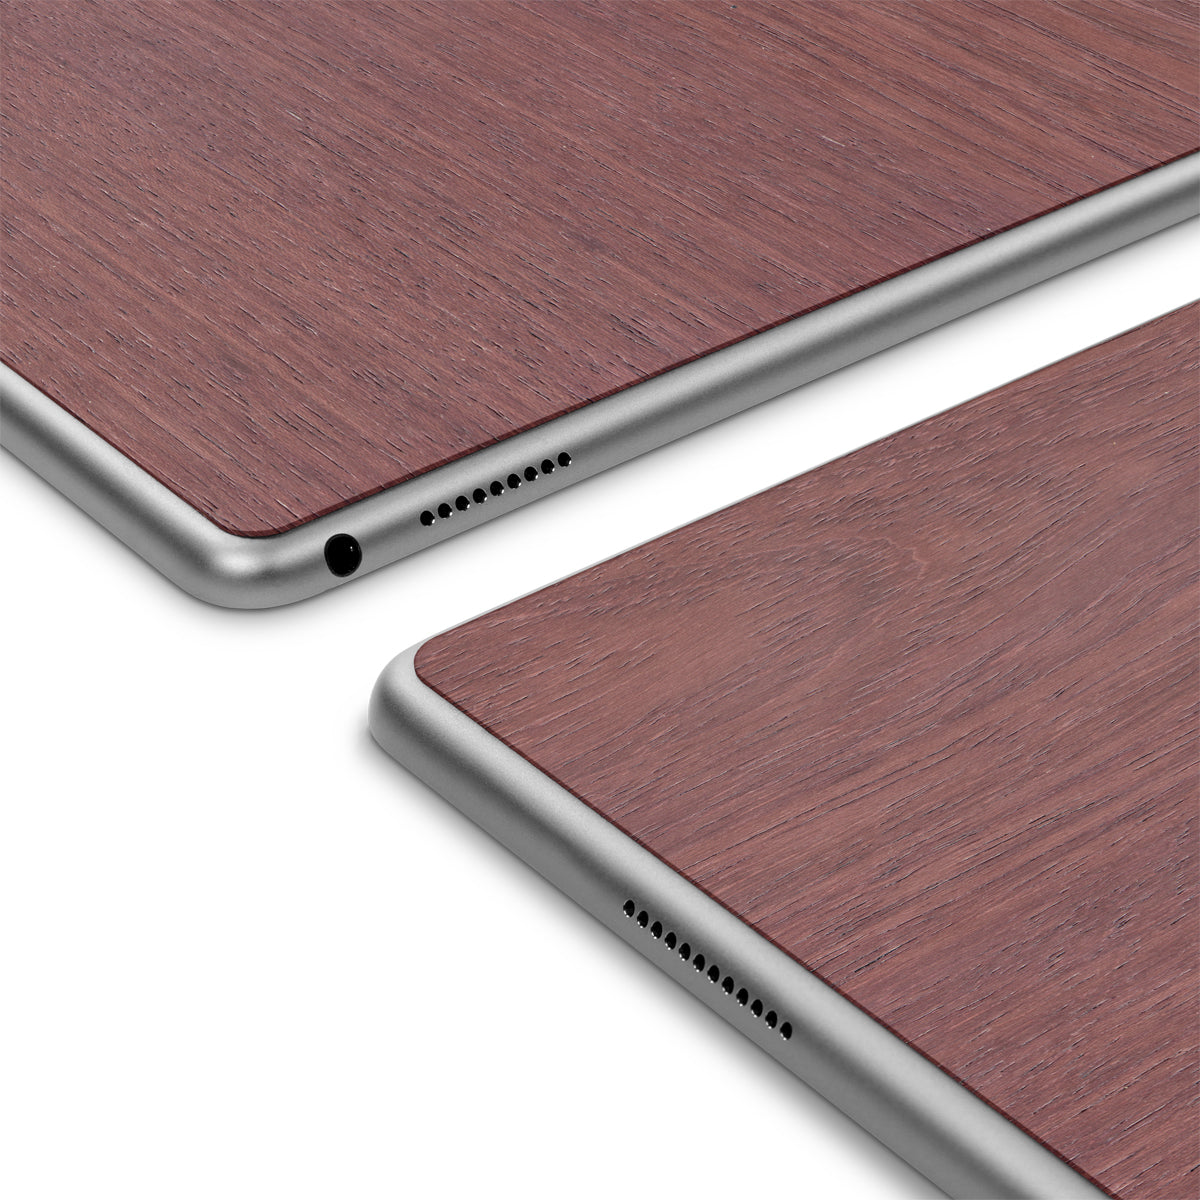 iPad 9.7-inch (2018) 6th Gen — #WoodBack Skin